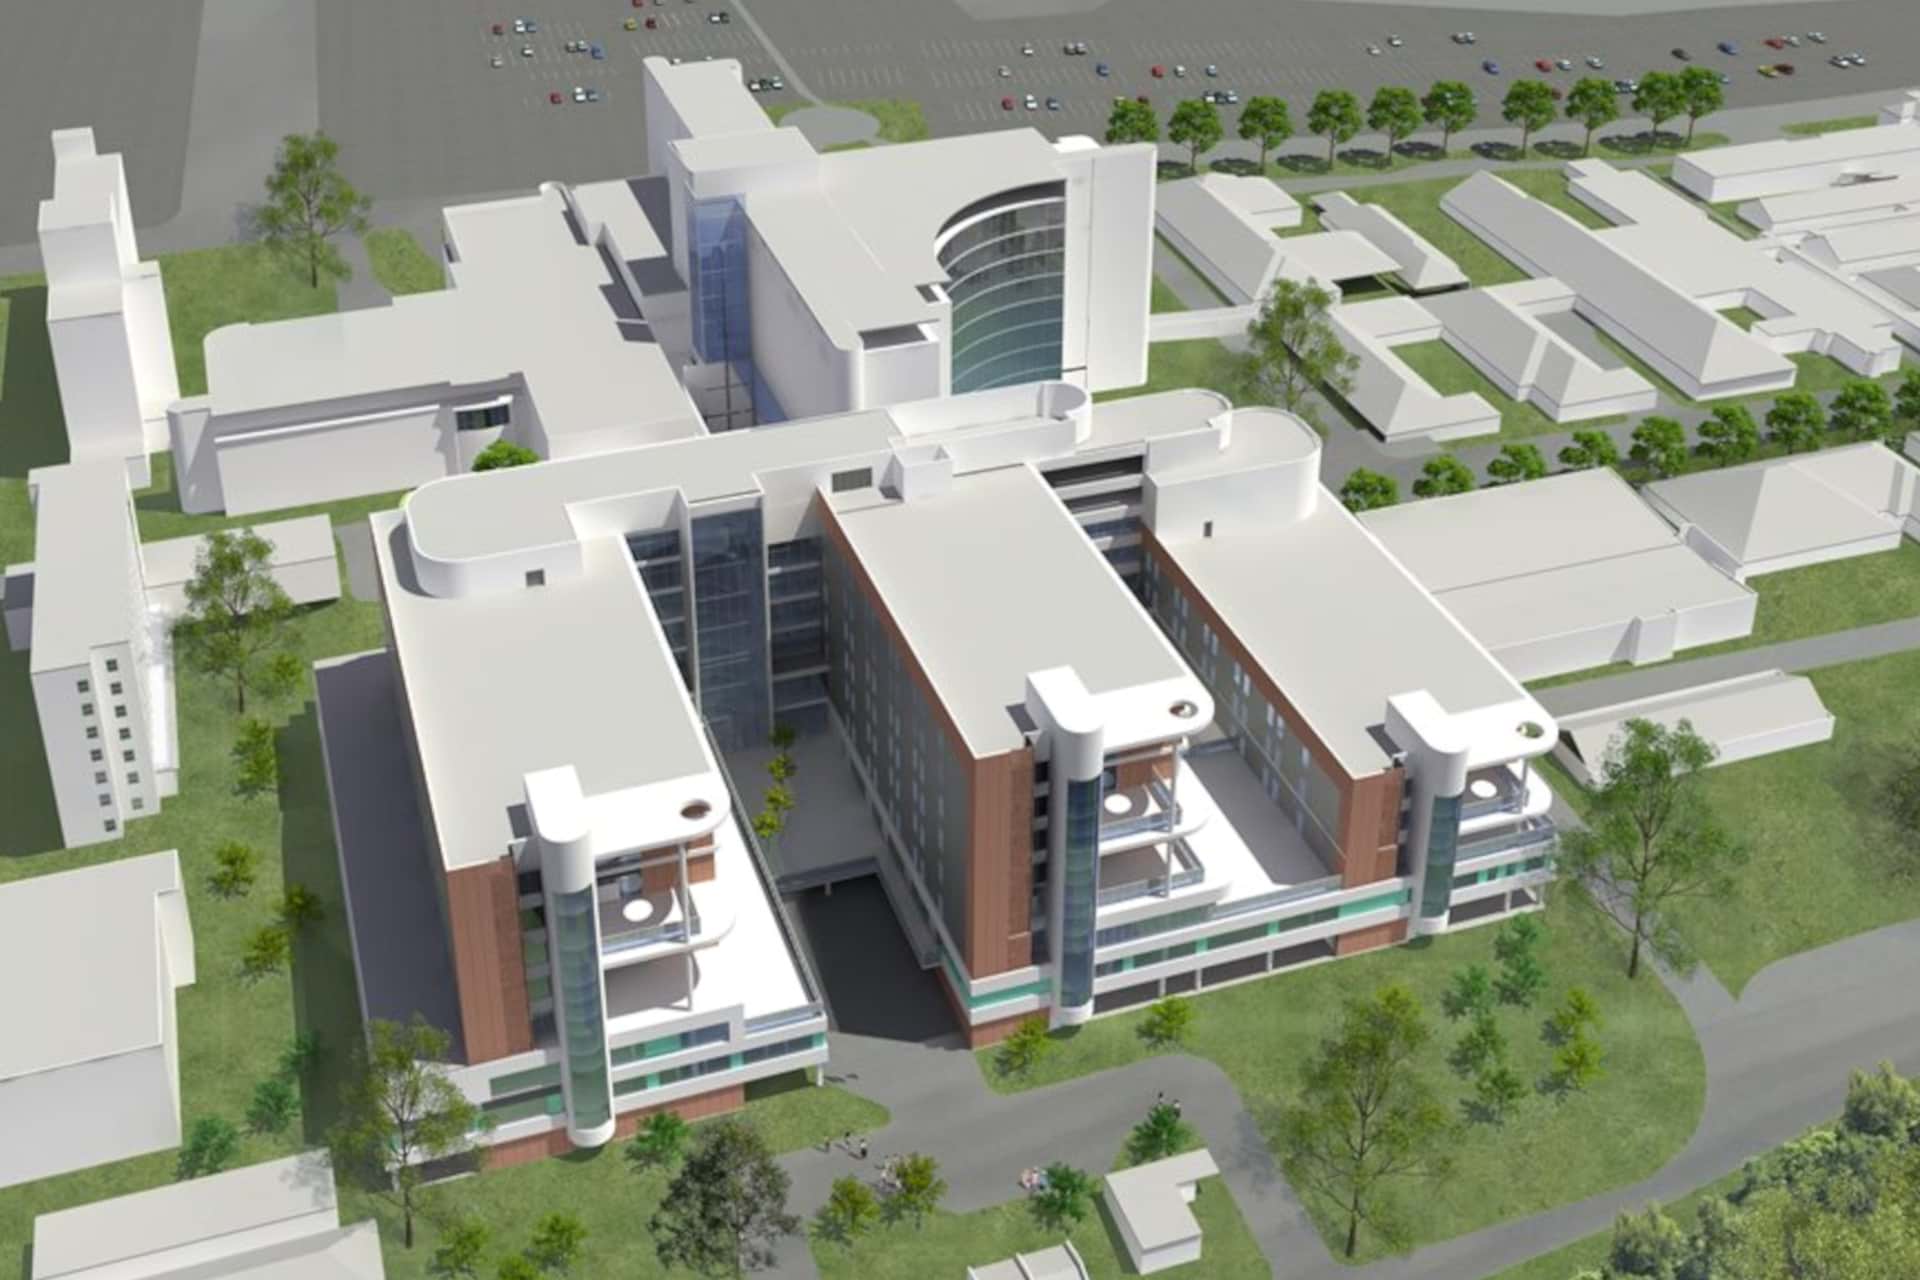 Concord hospital redevelopment concept